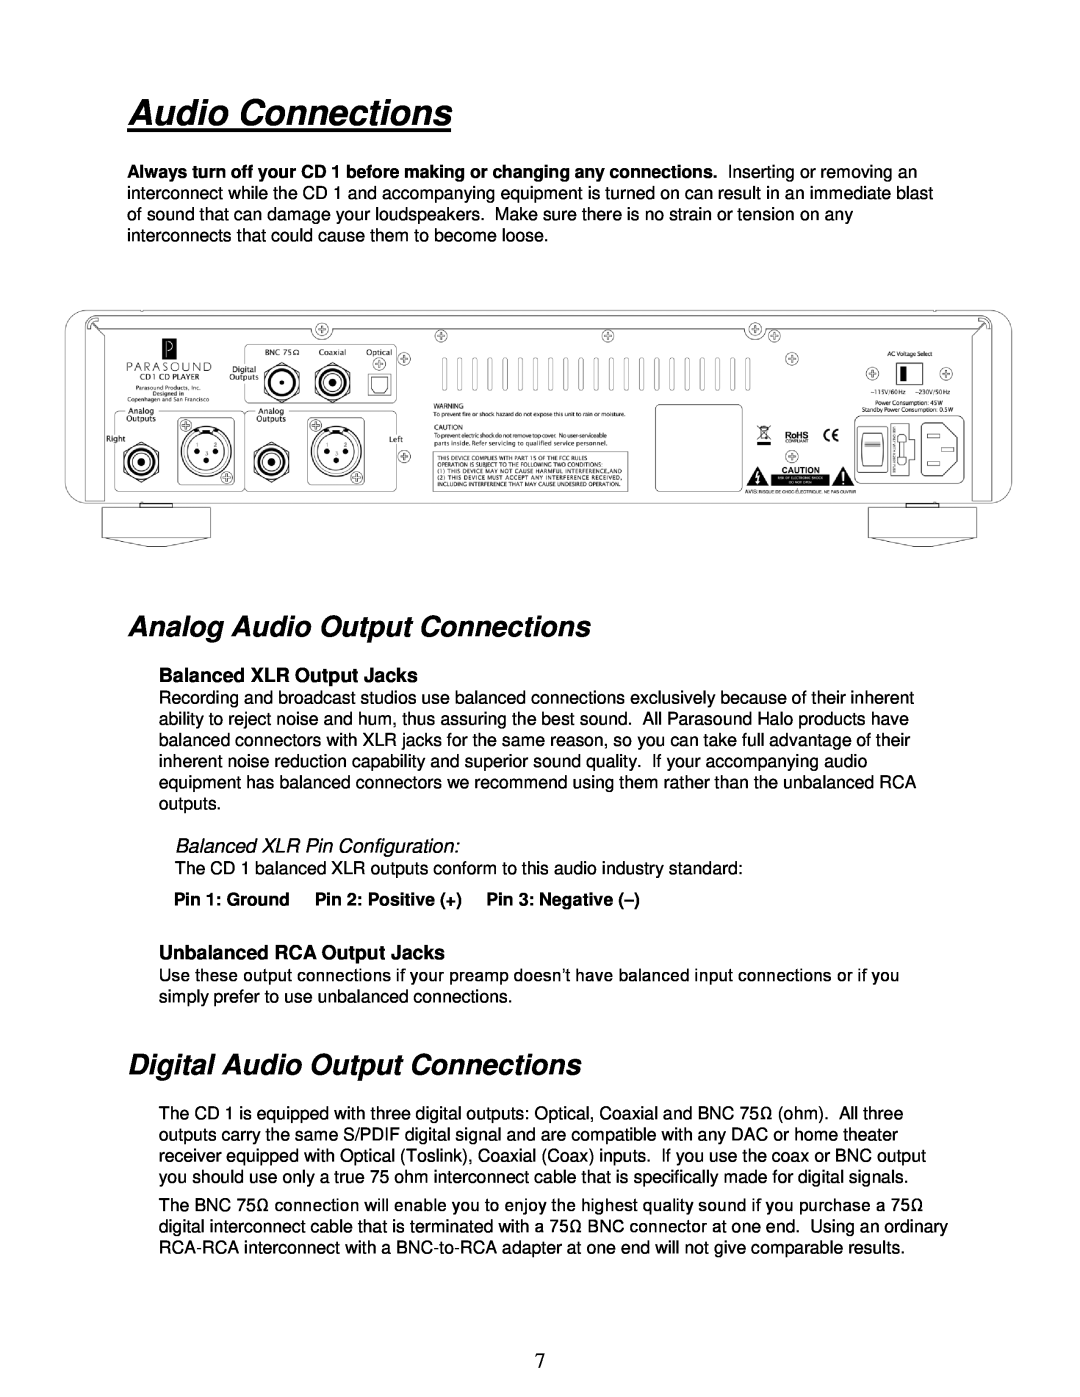 Parasound CD 1 manual Audio Connections, Analog Audio Output Connections, Digital Audio Output Connections 